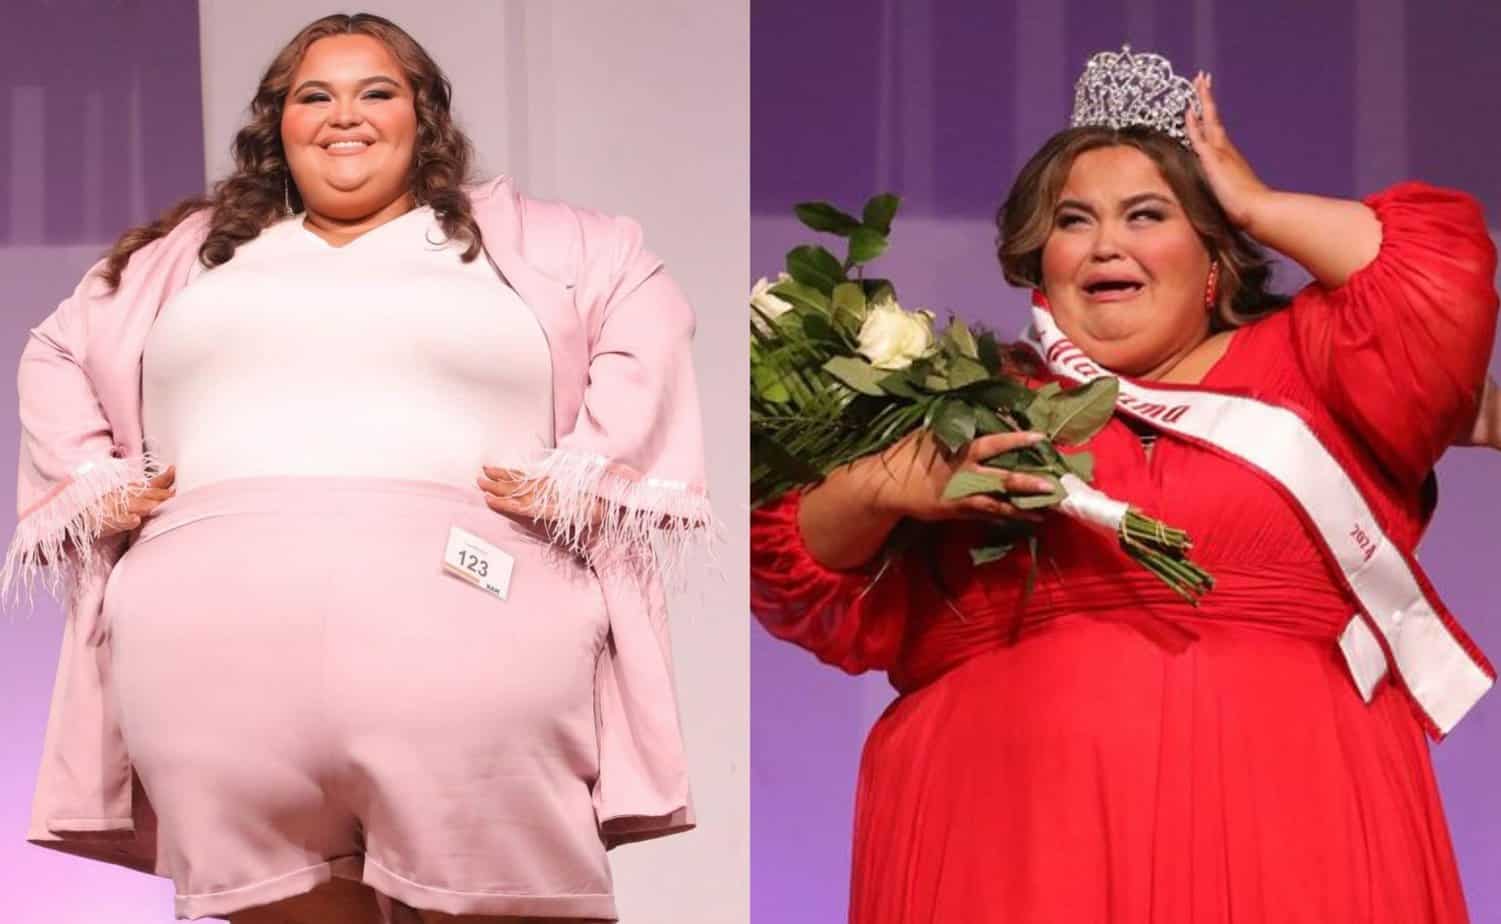 Miss Alabama beauty contest